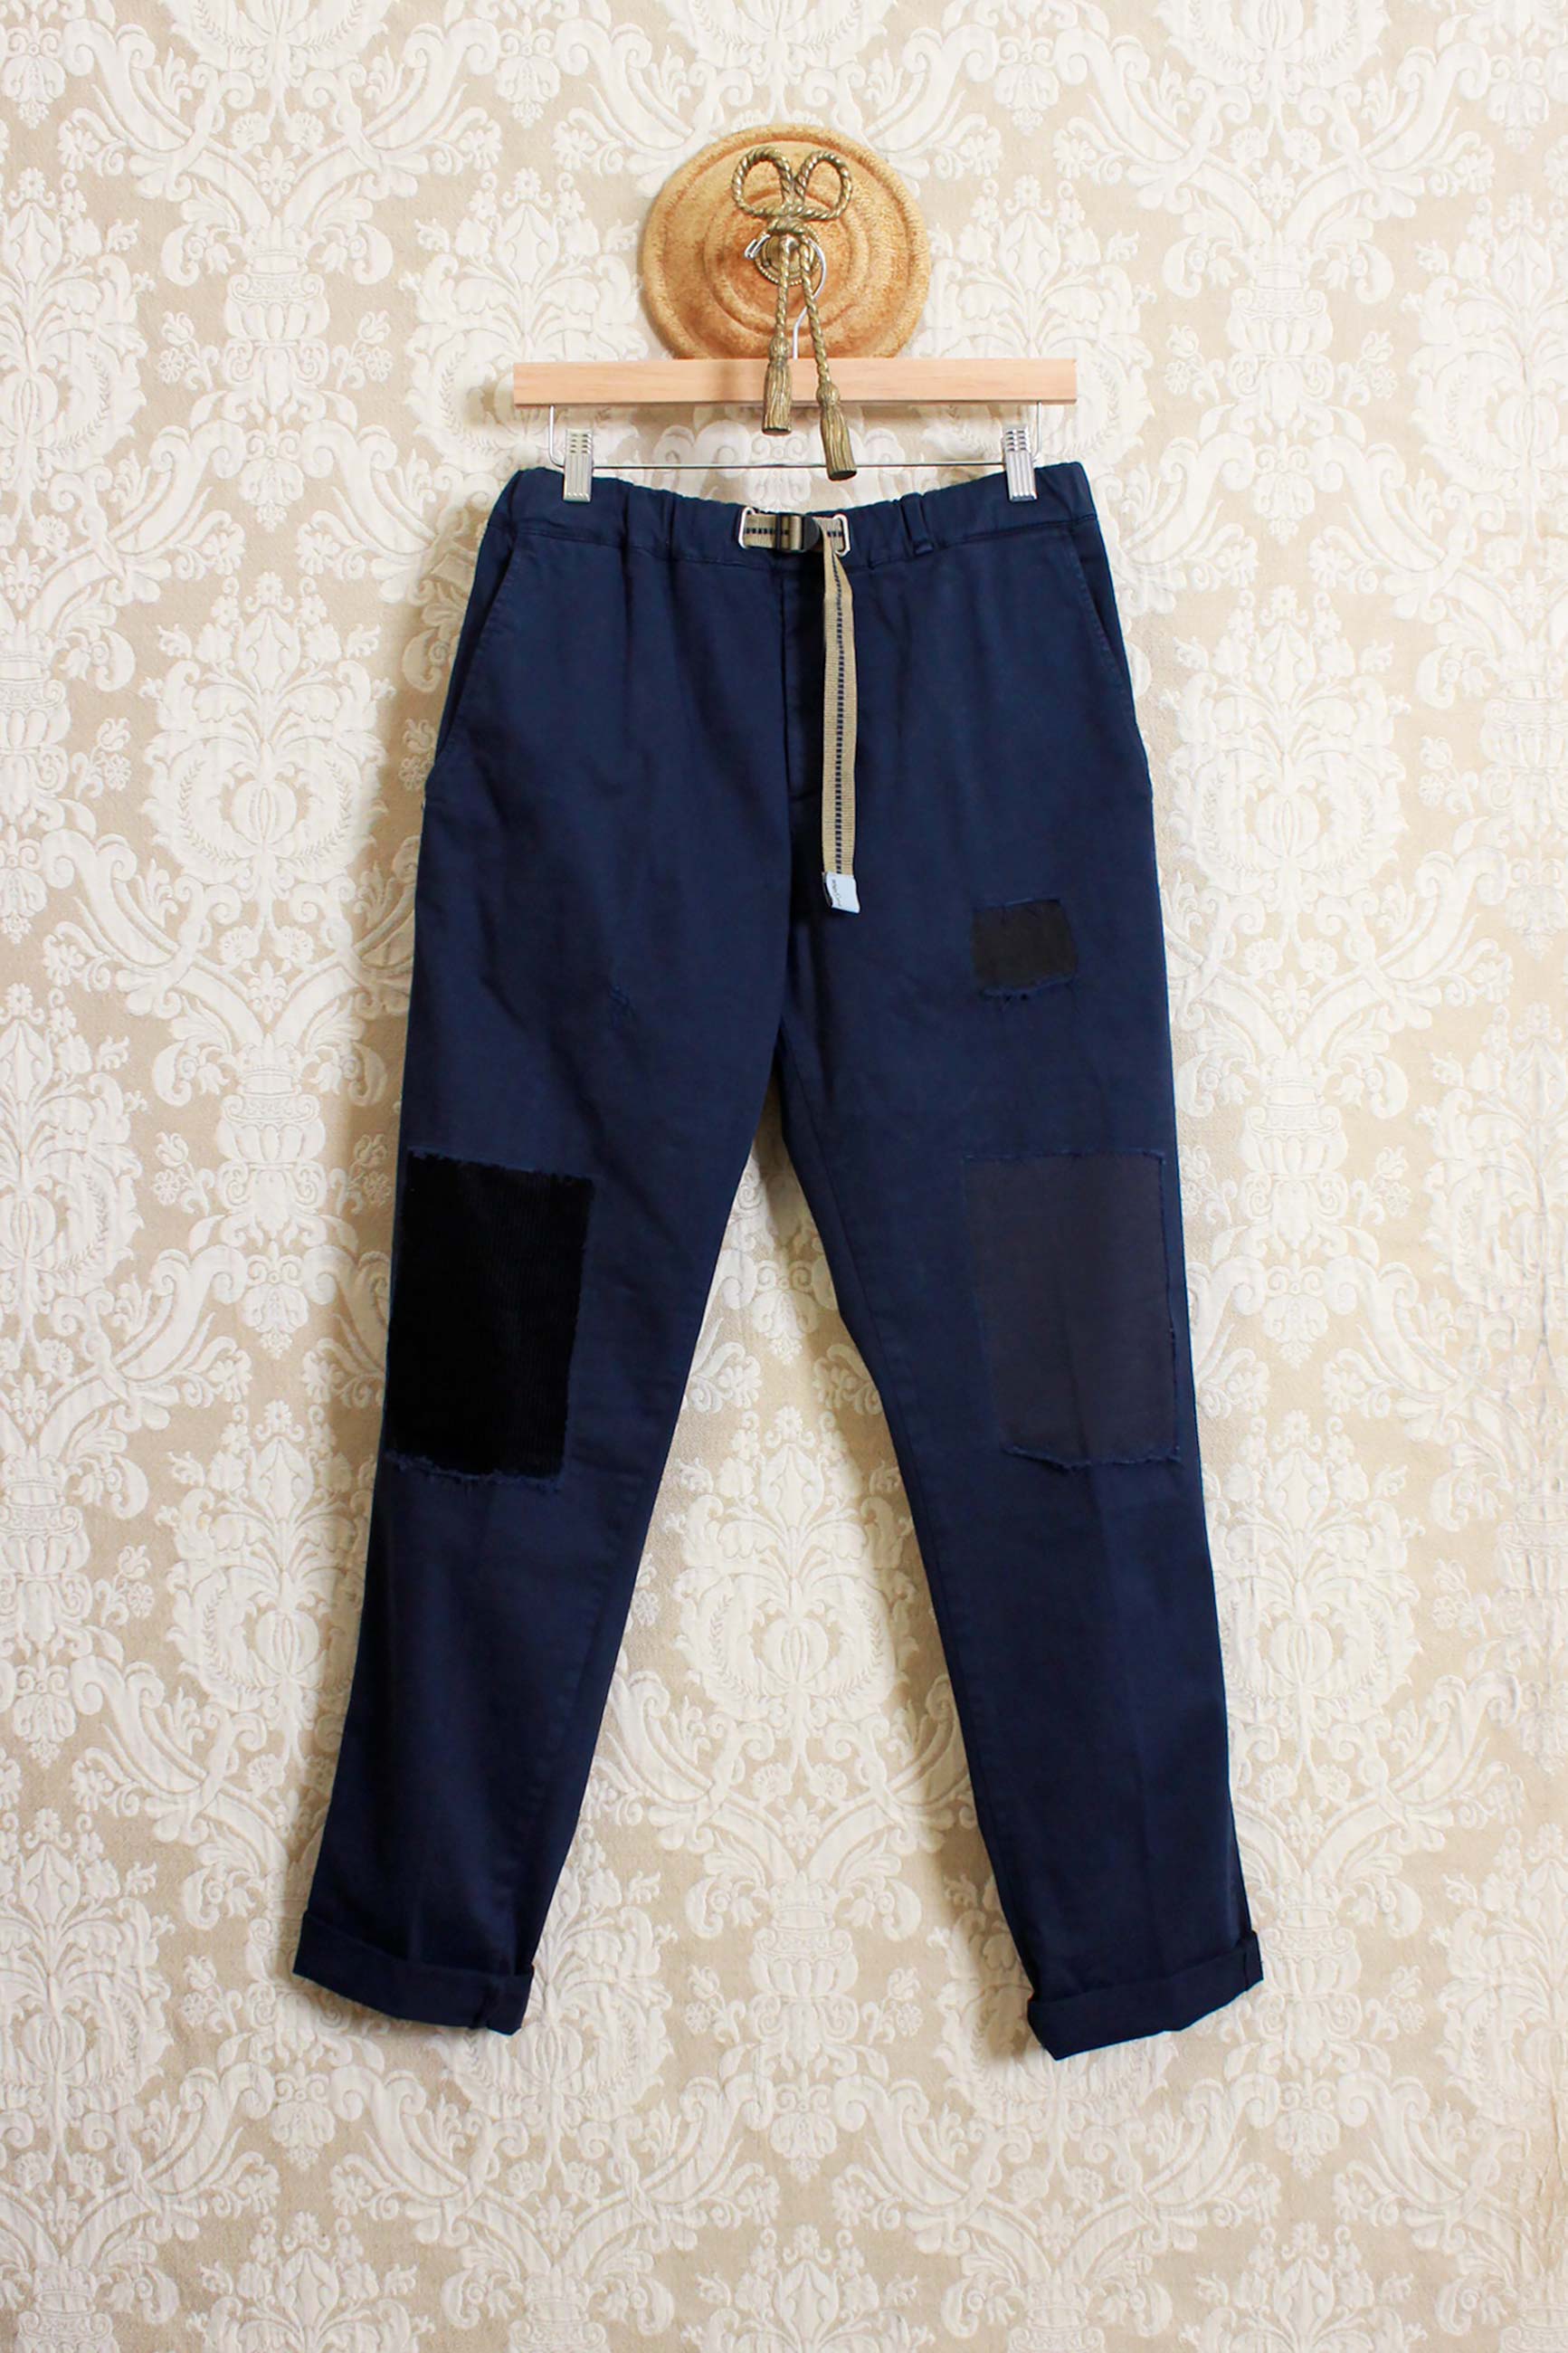 Pantalone jogger greg di white sand nall'inedita versione patchwork blue black